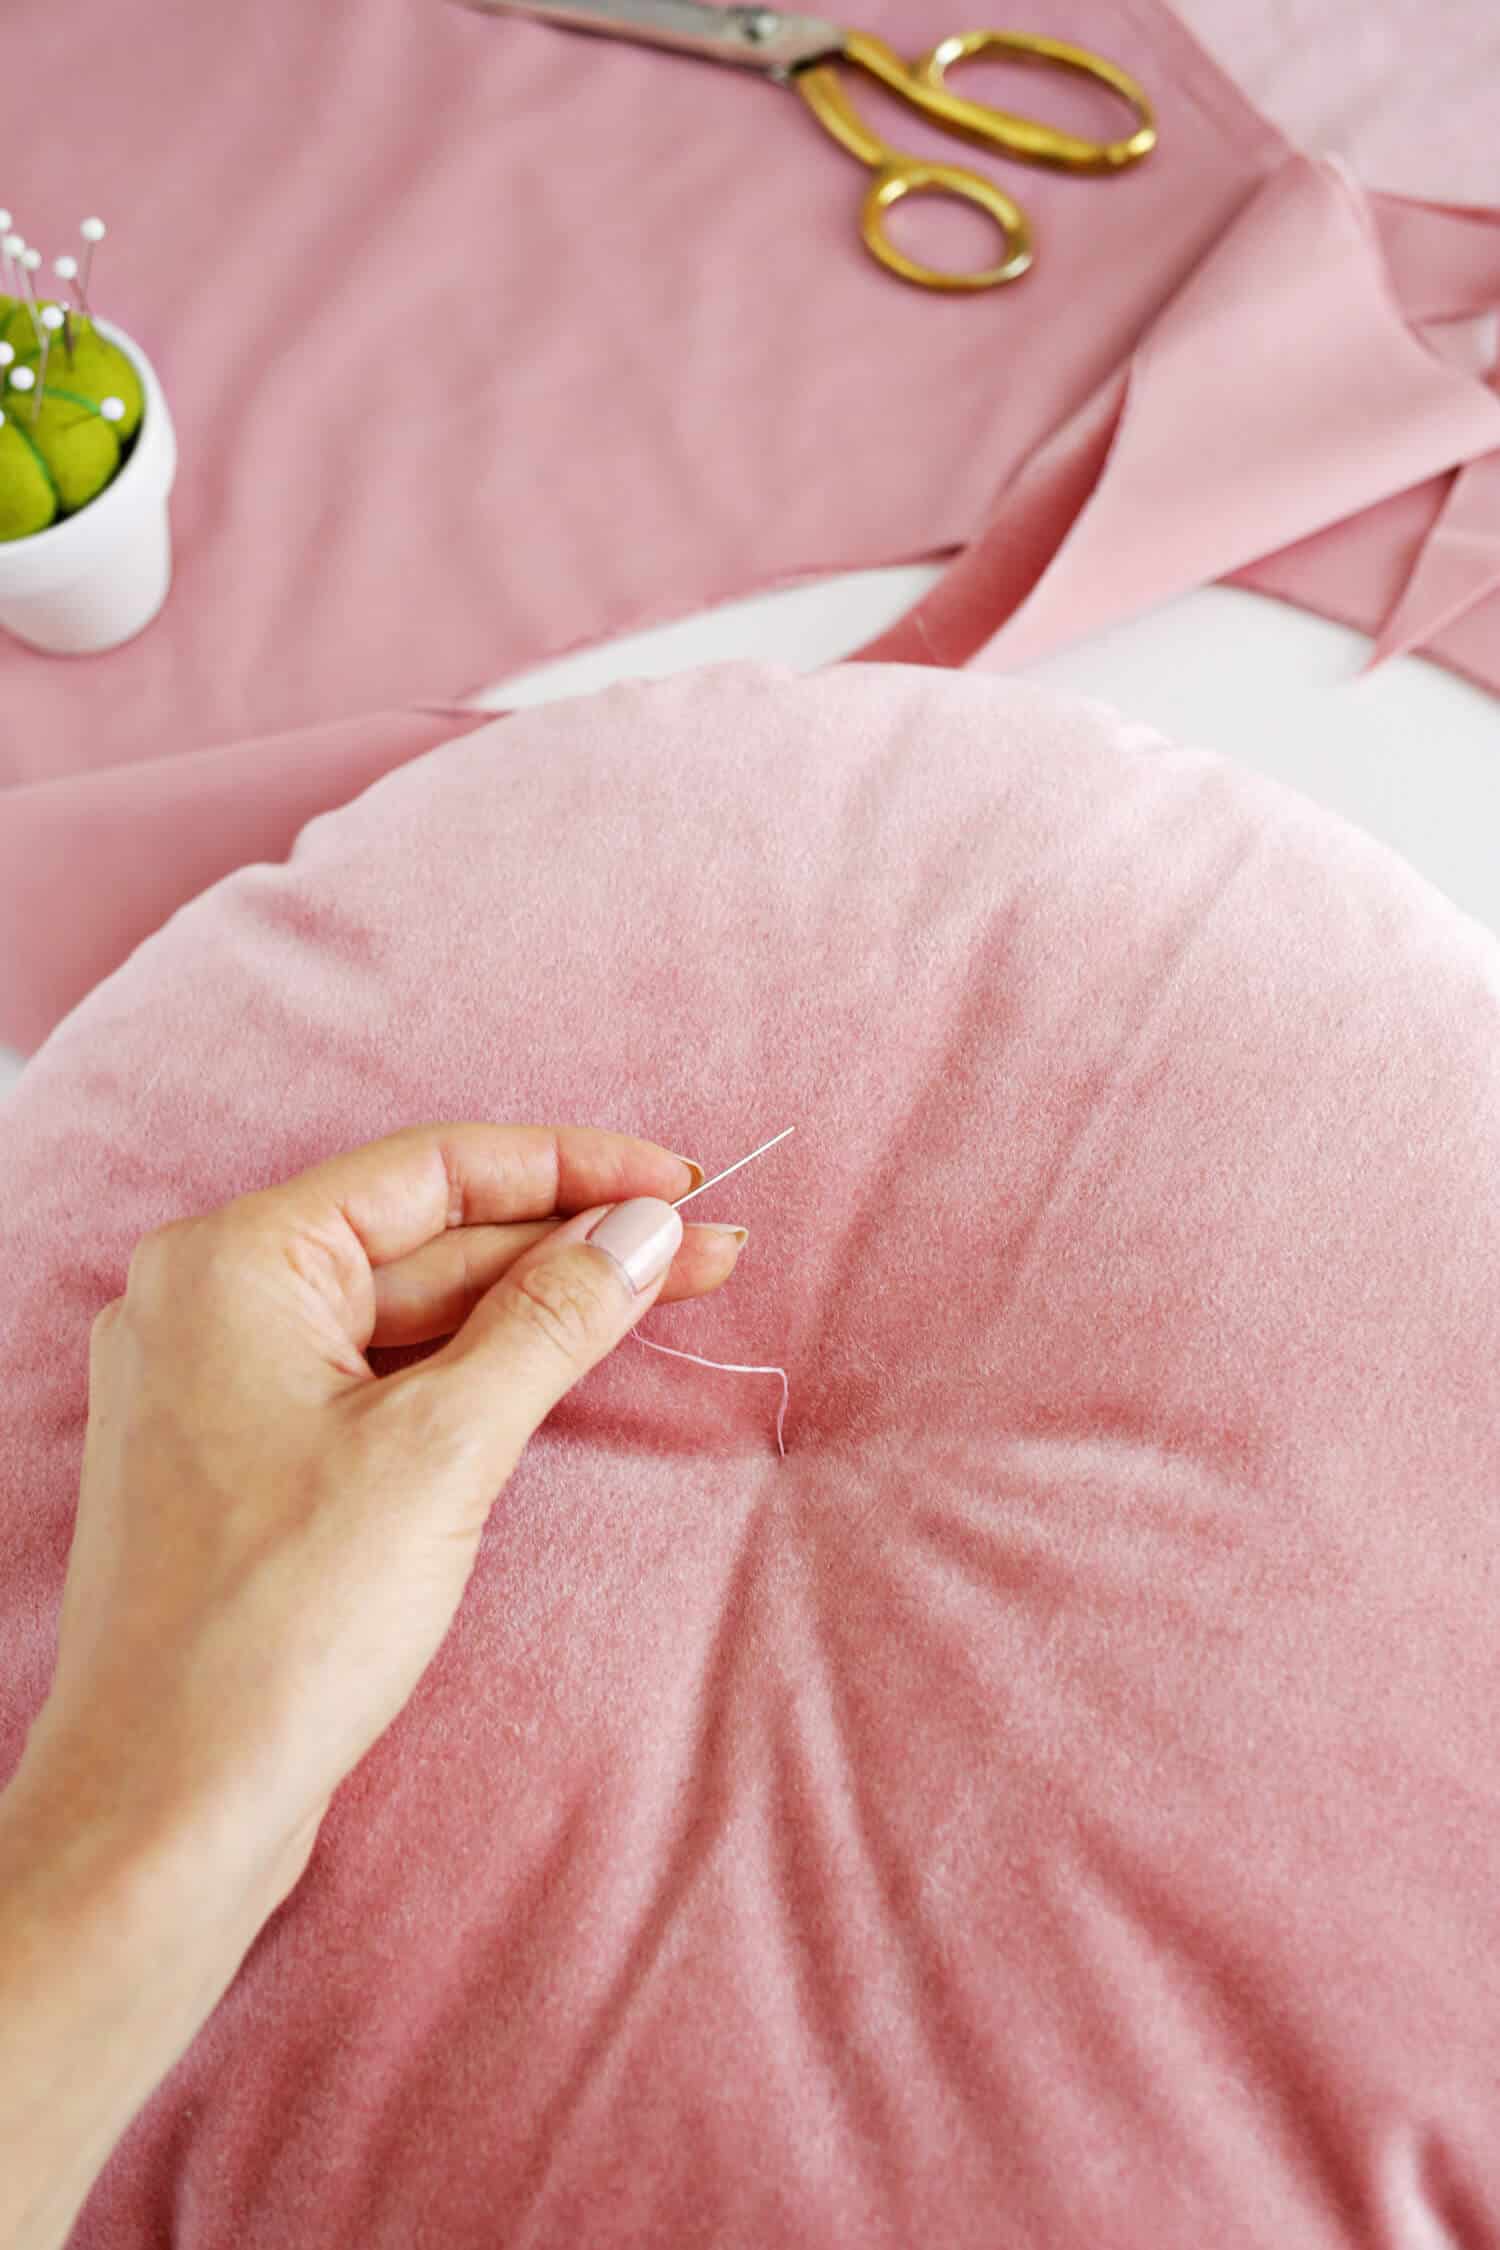 pink round pillow